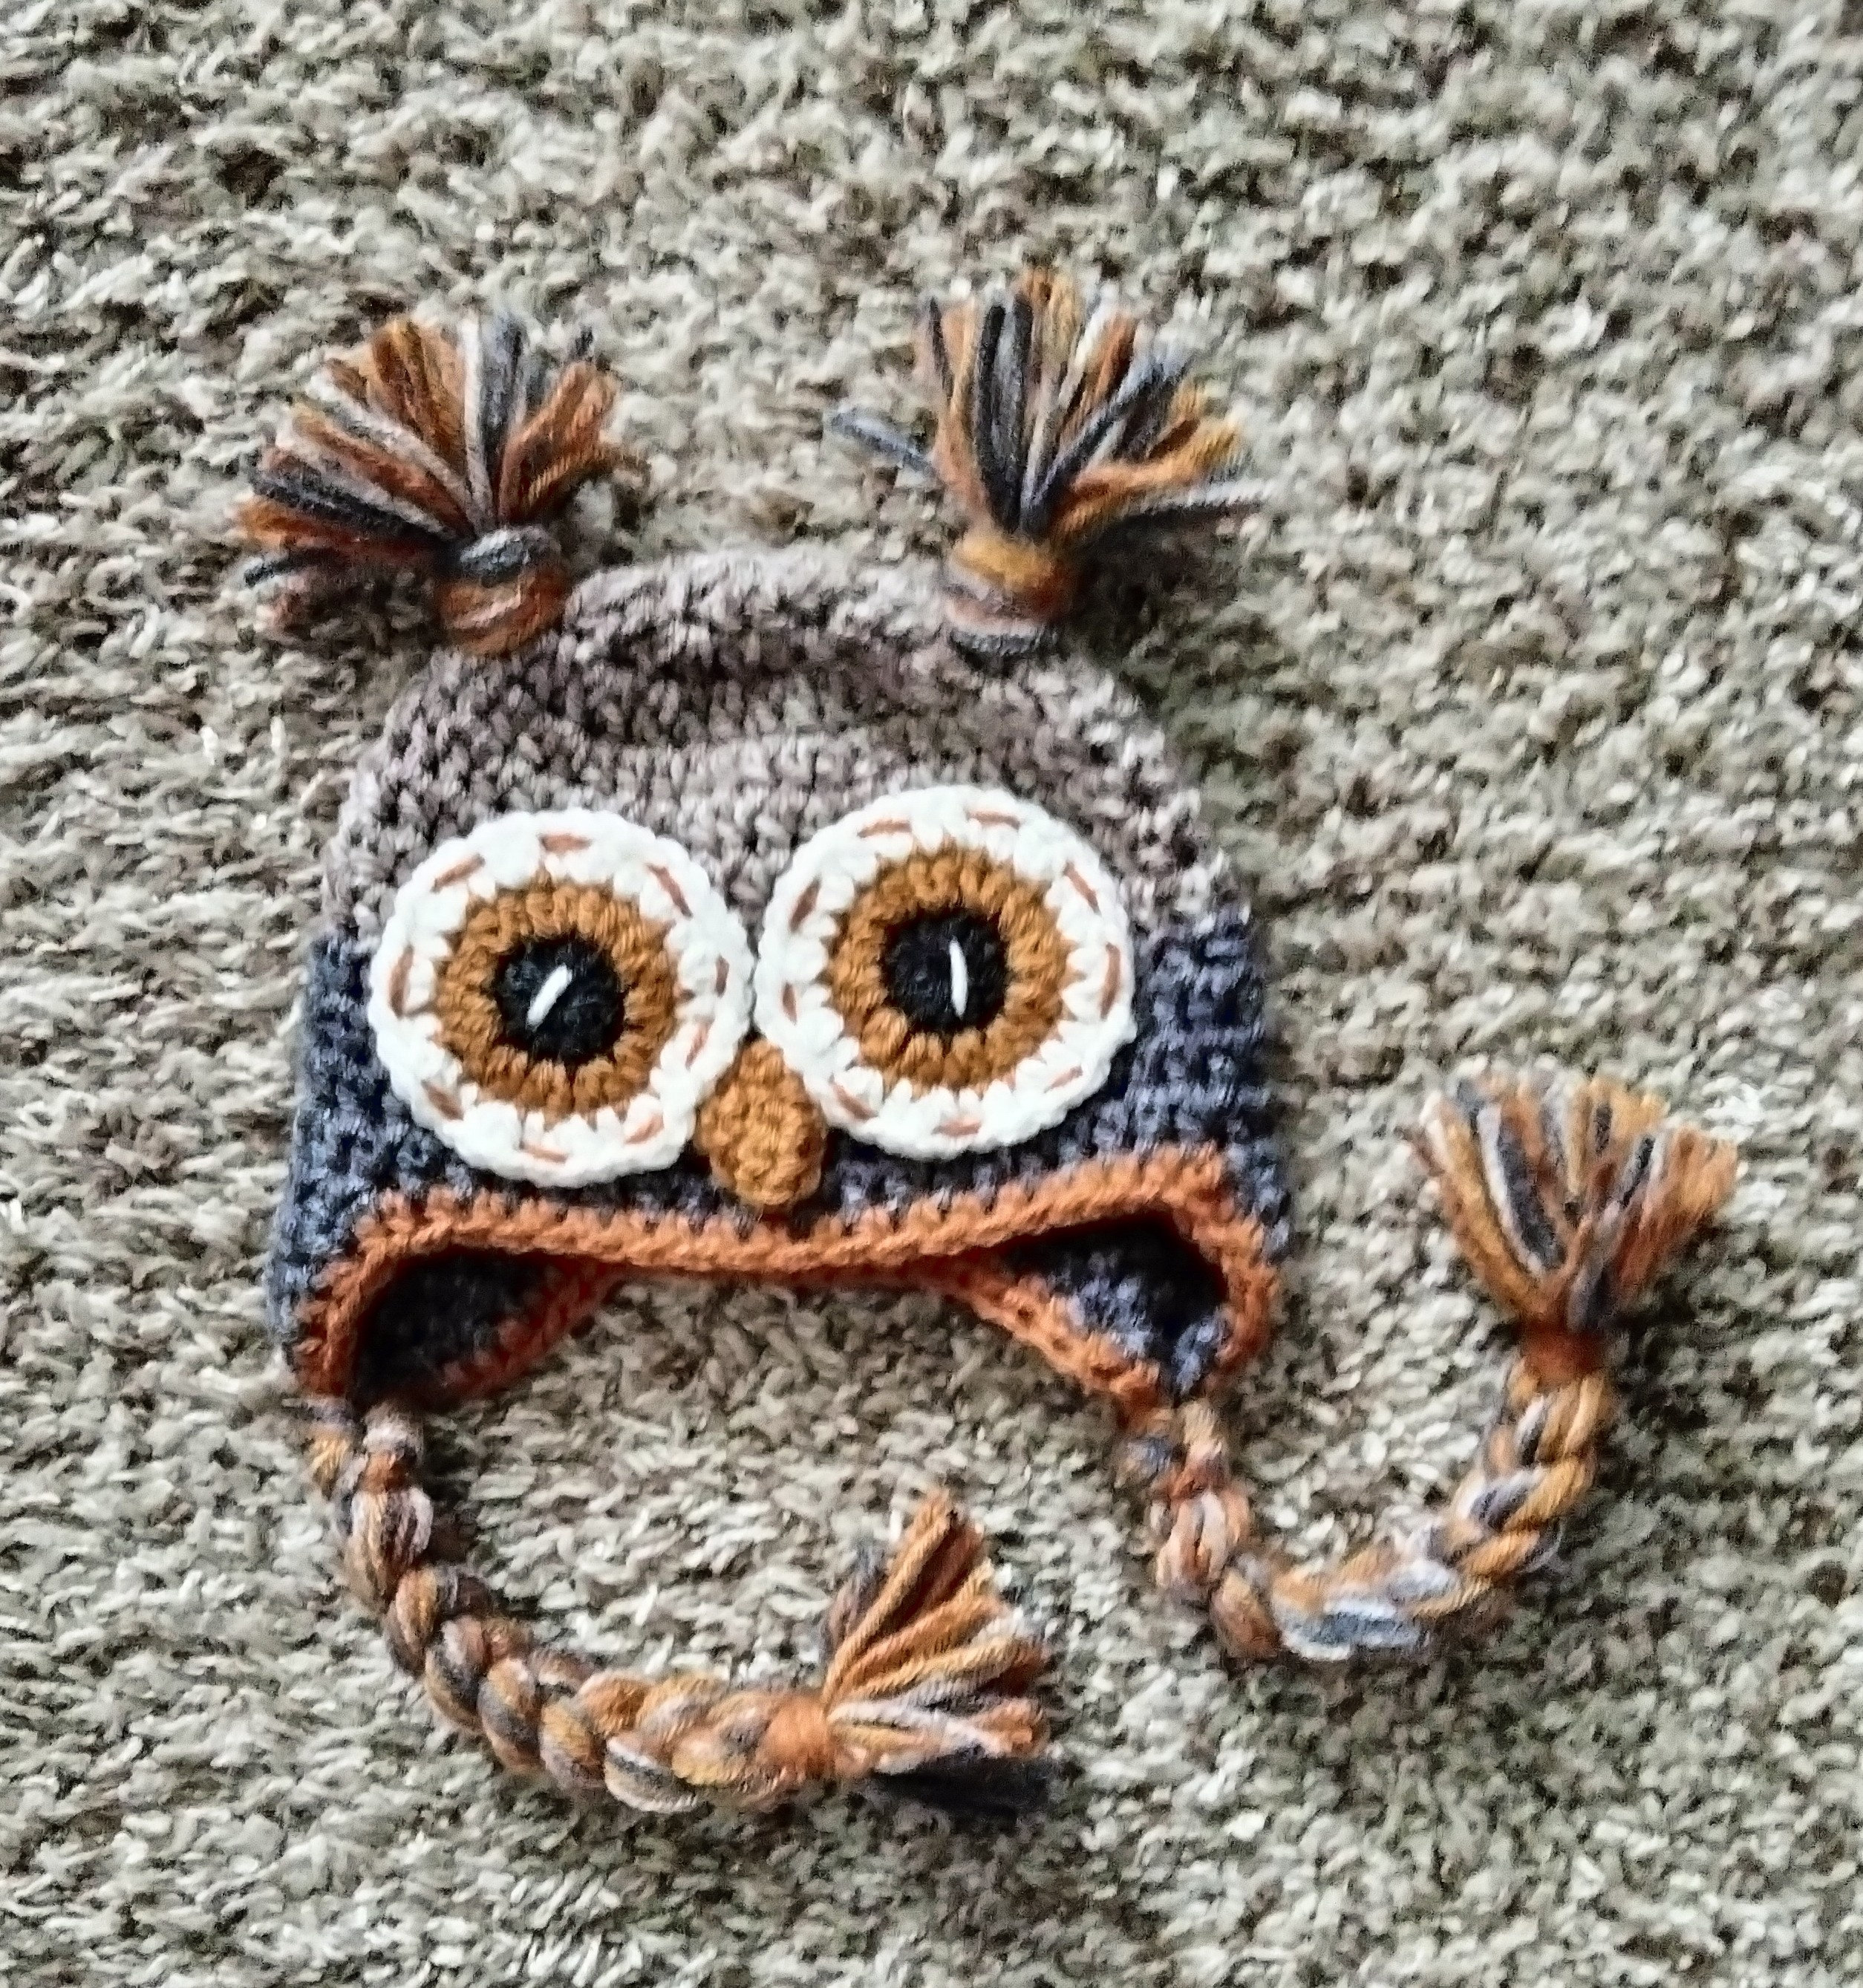 Hand Crochet Owl Hat, Kids Age 3-5 Magenta Pink & Purple Trapper Hat 